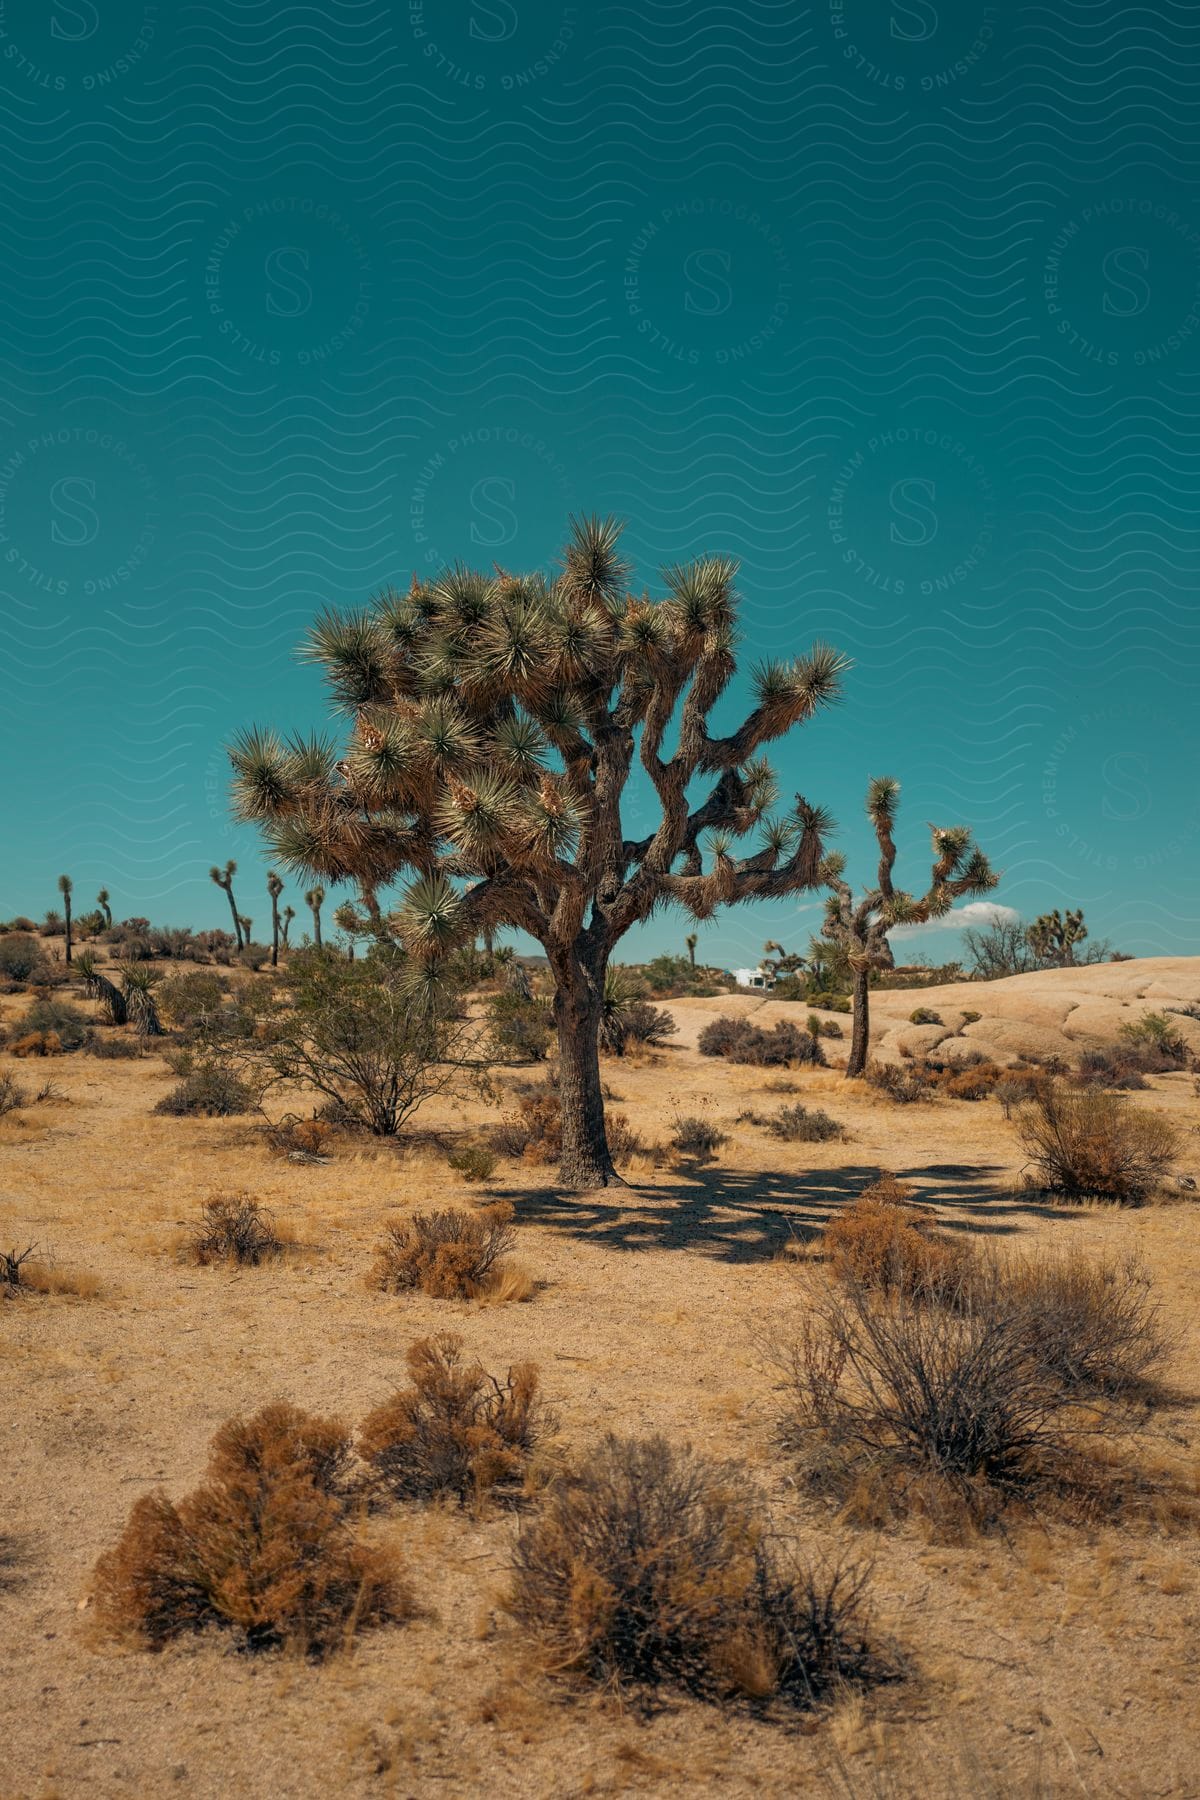 Plants in a desert landscape during midday